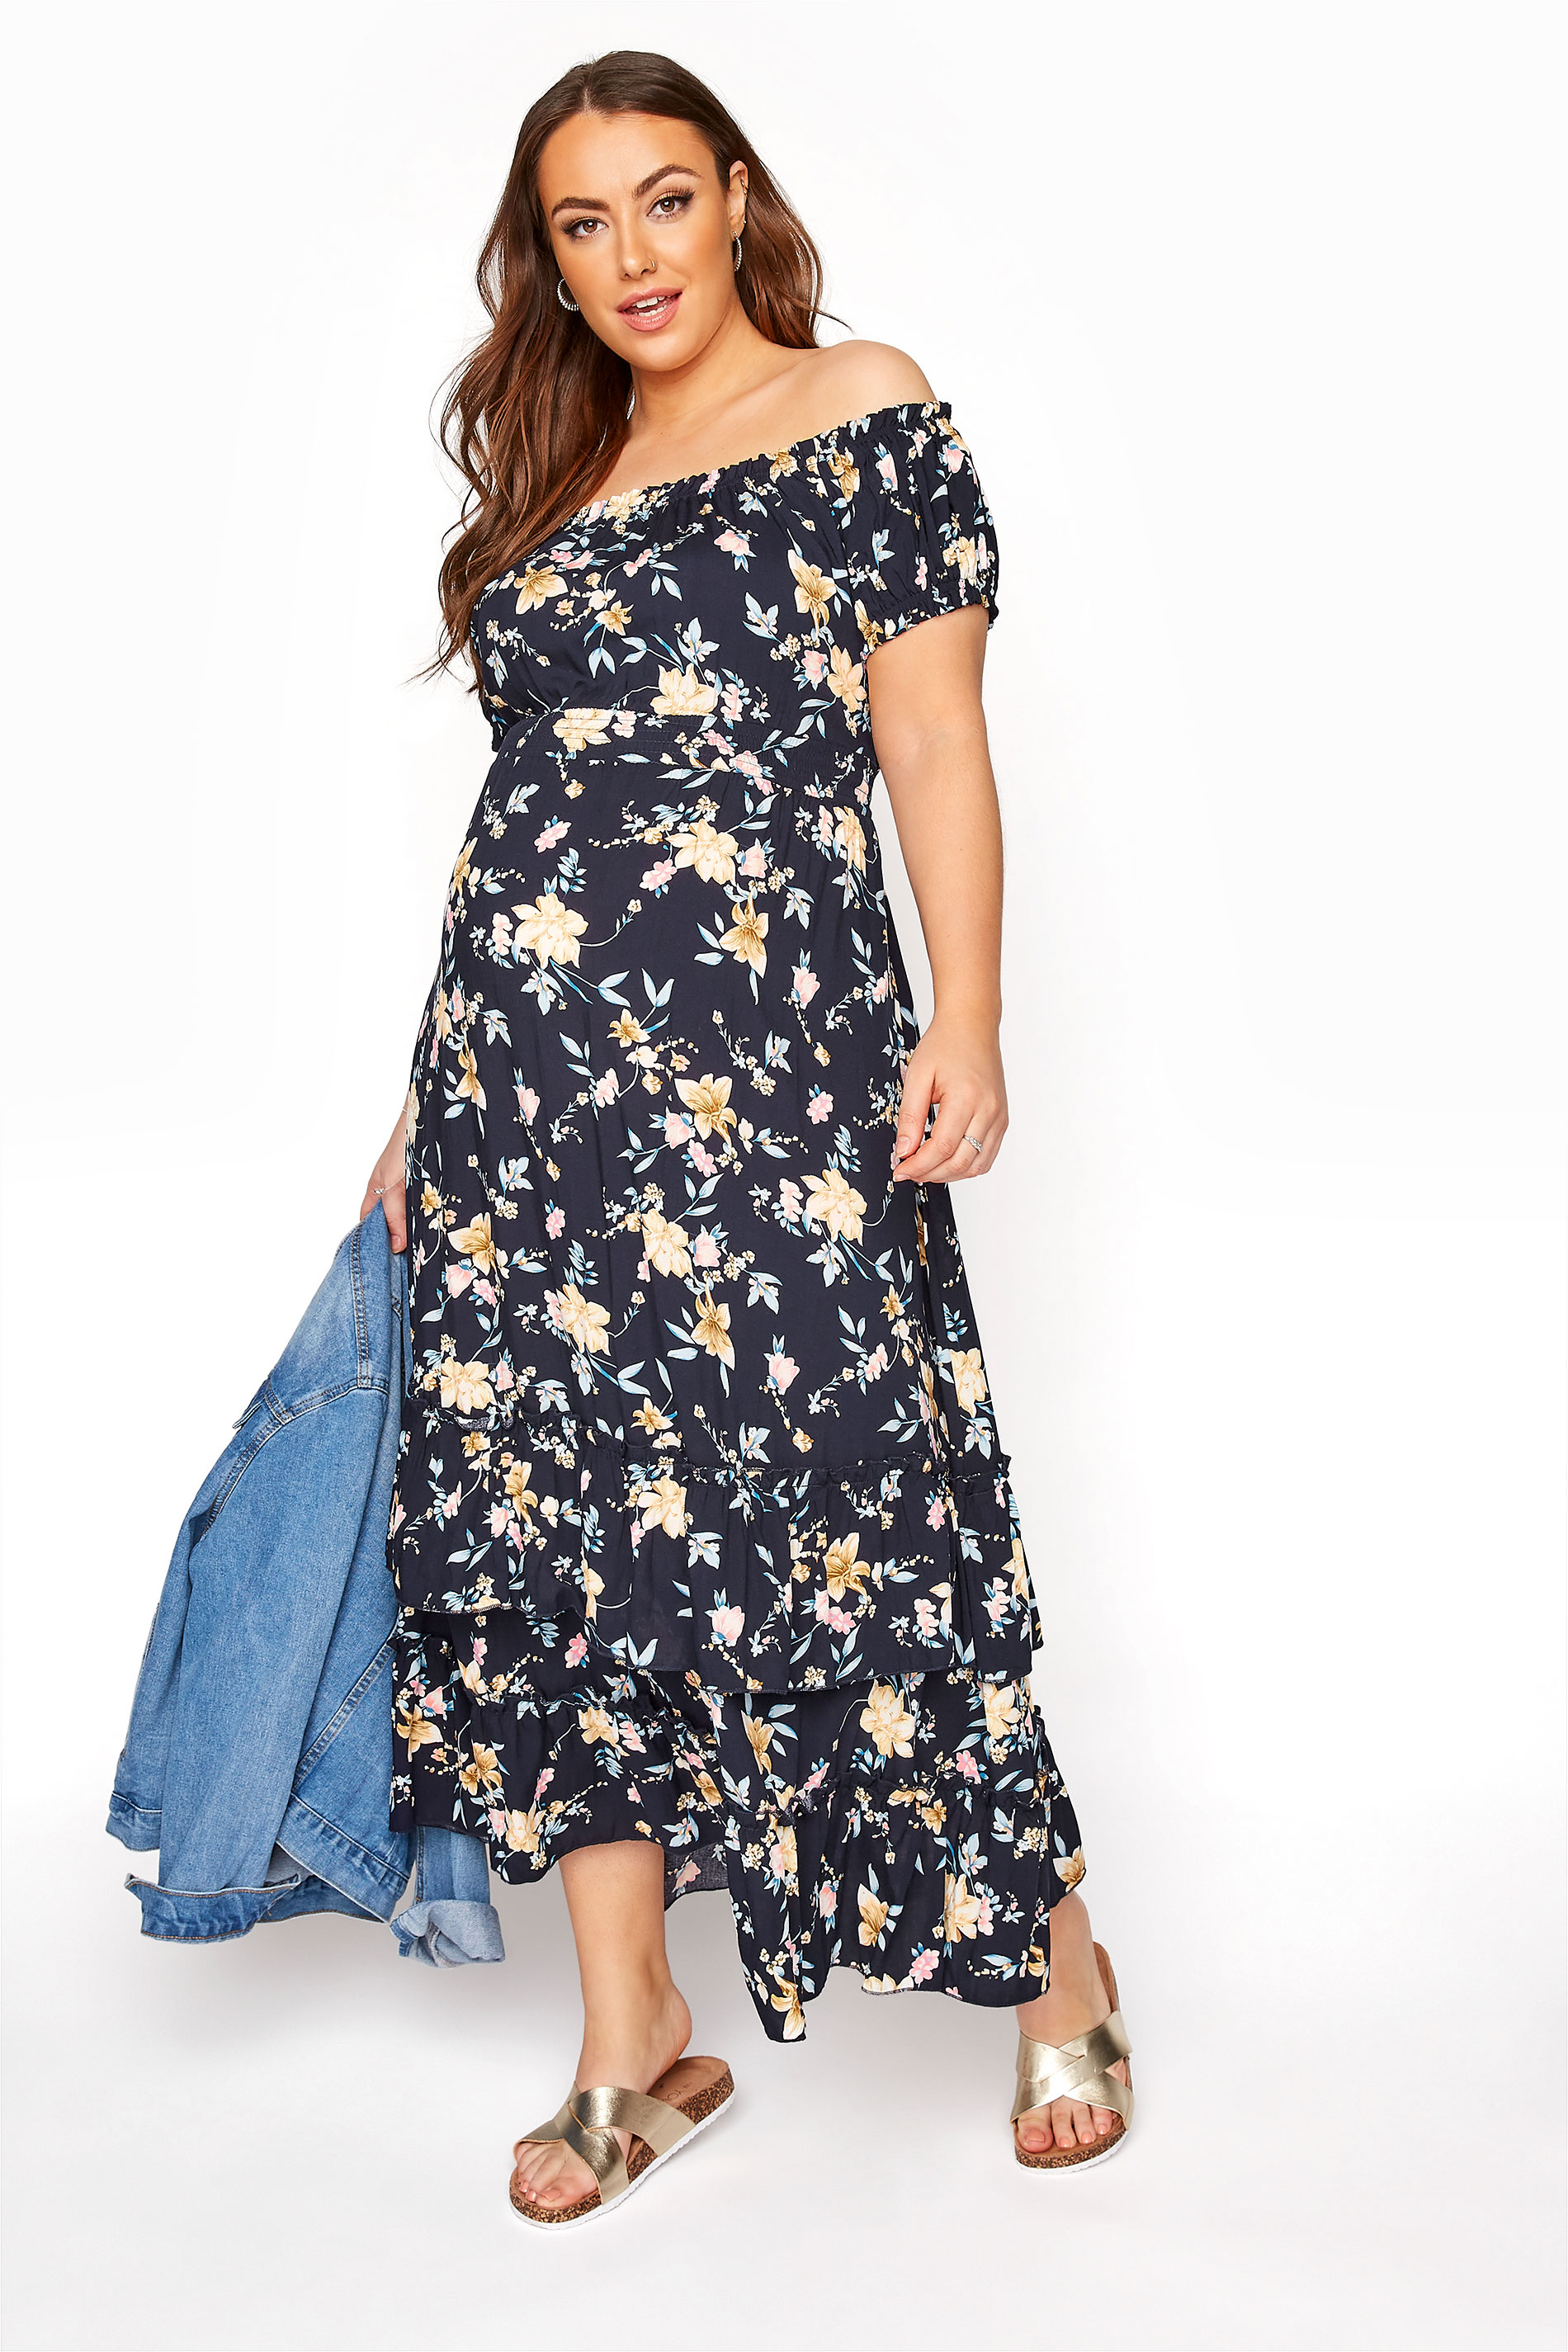 BUMP IT UP MATERNITY Navy Floral Bardot Maxi Dress | Yours Clothing